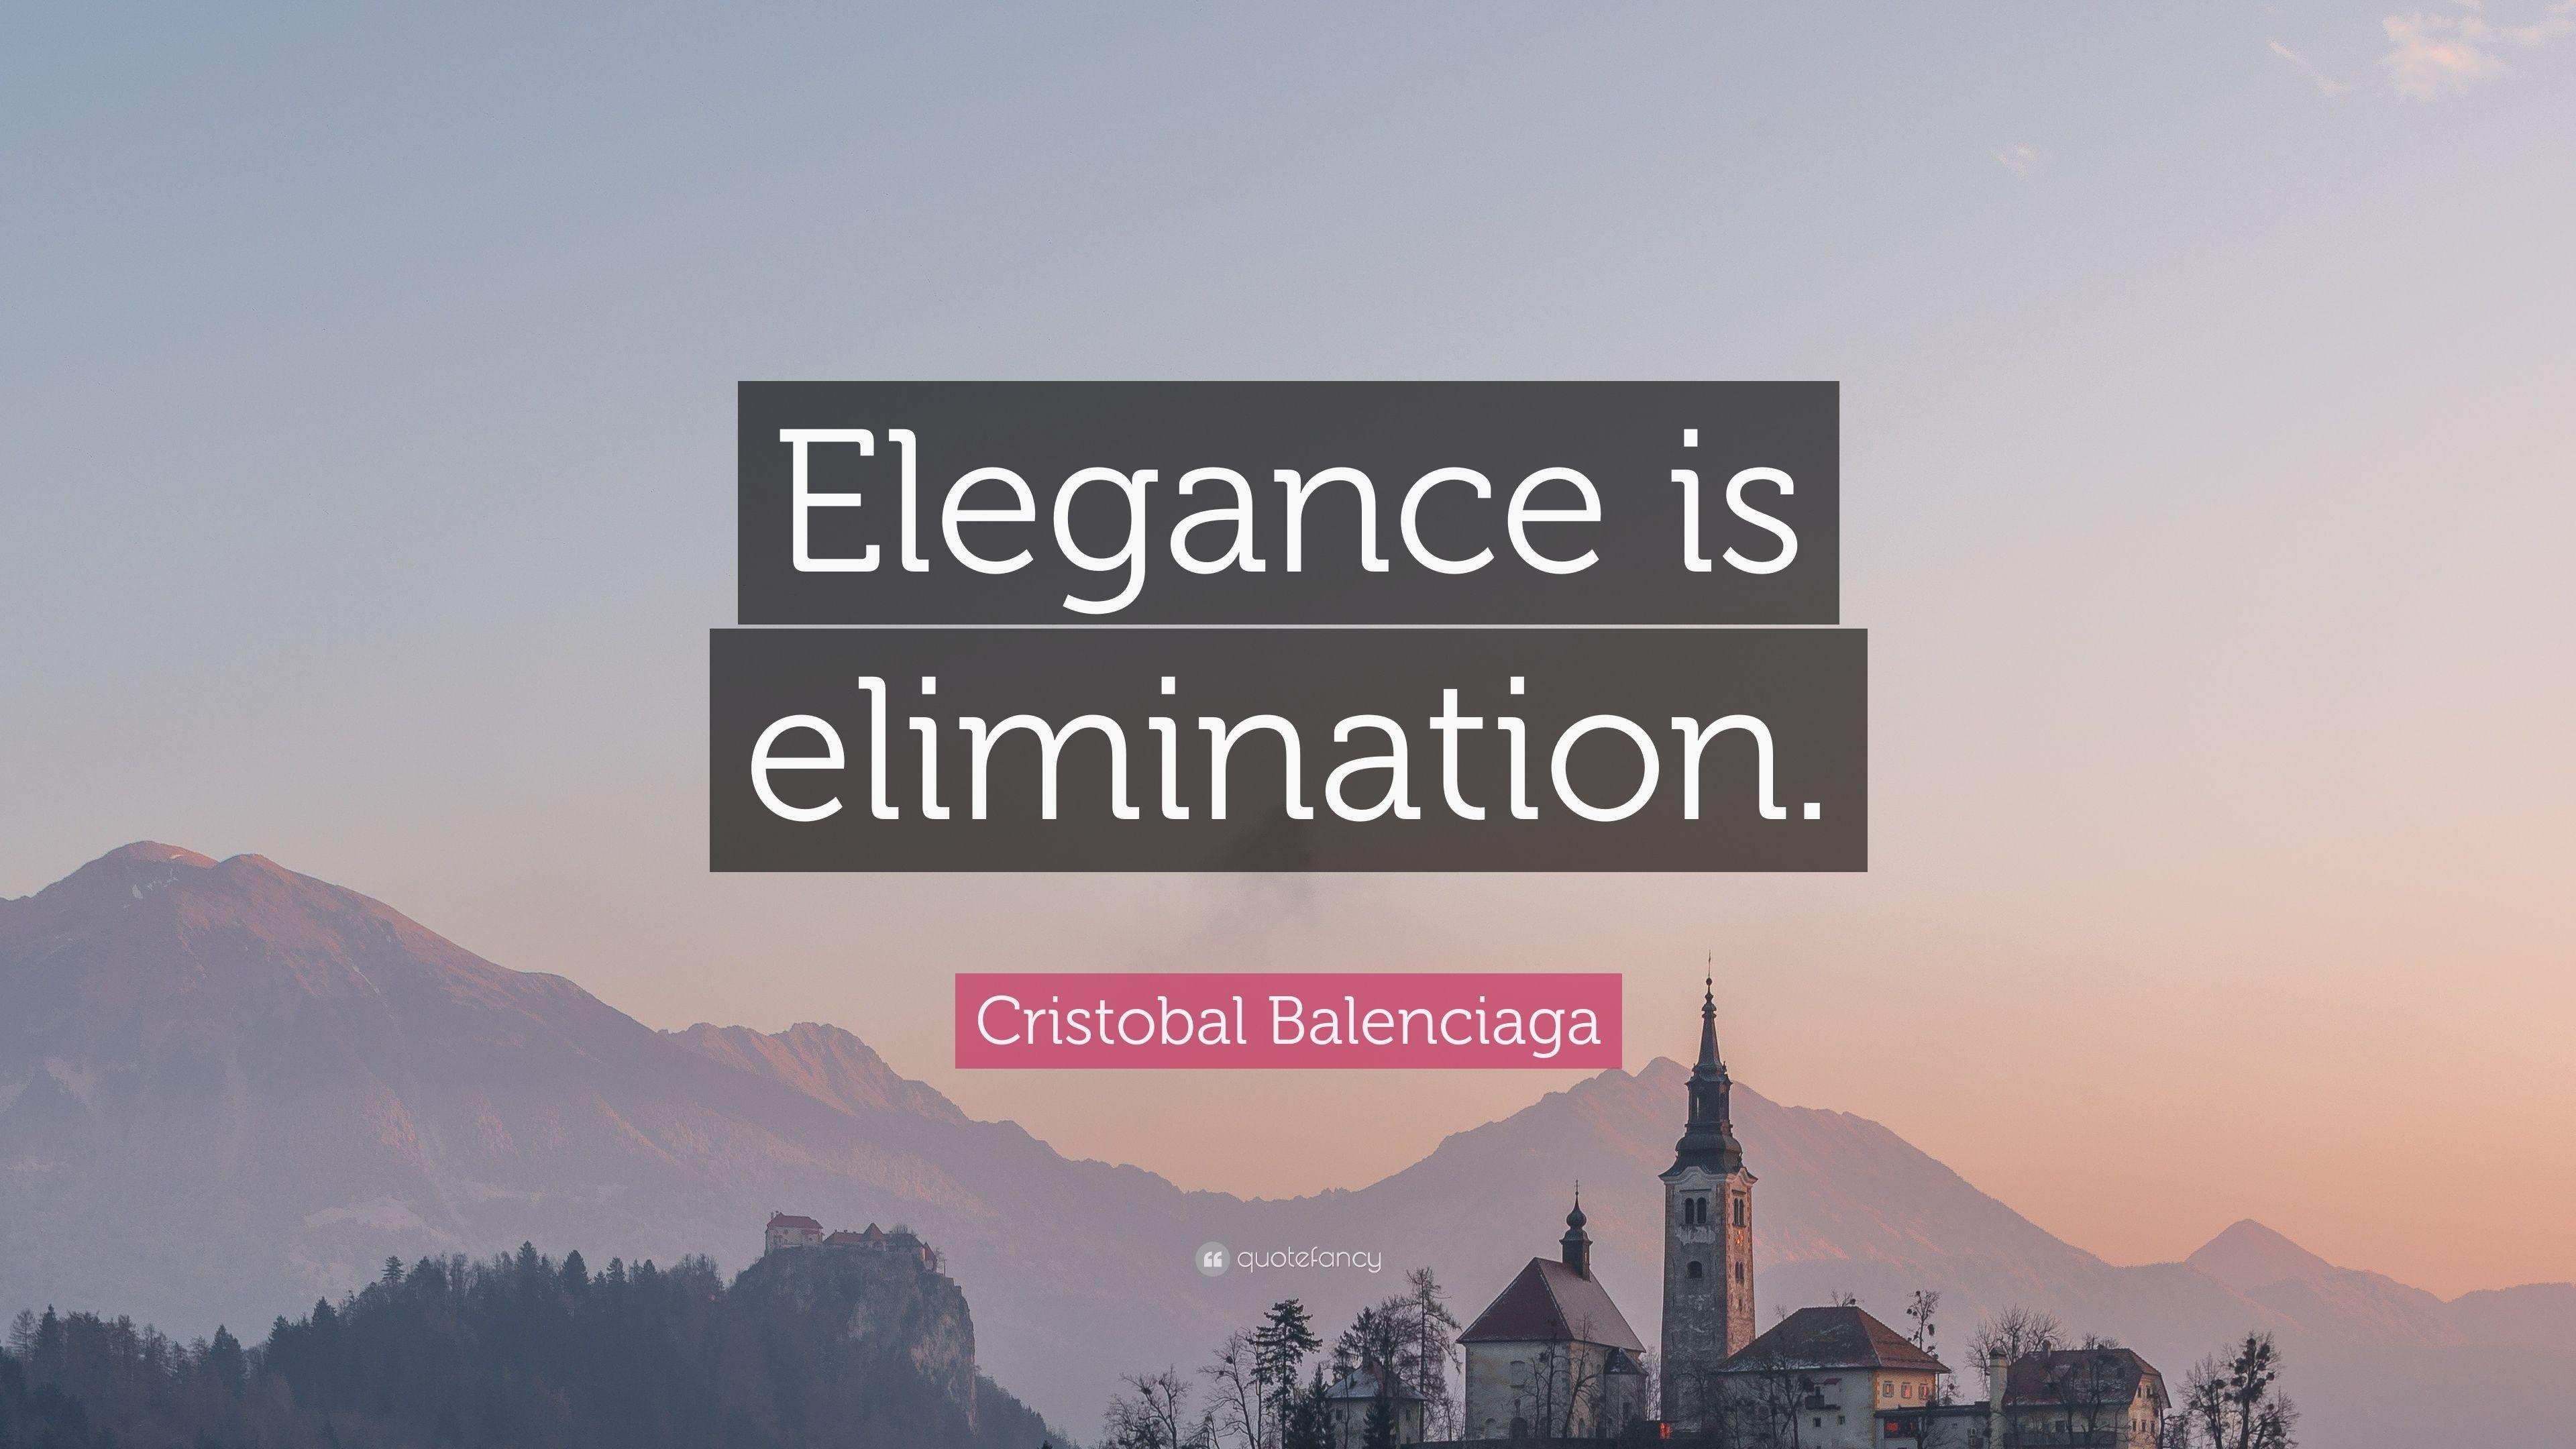 Cristobal Balenciaga Quote: “Elegance is elimination.” 7